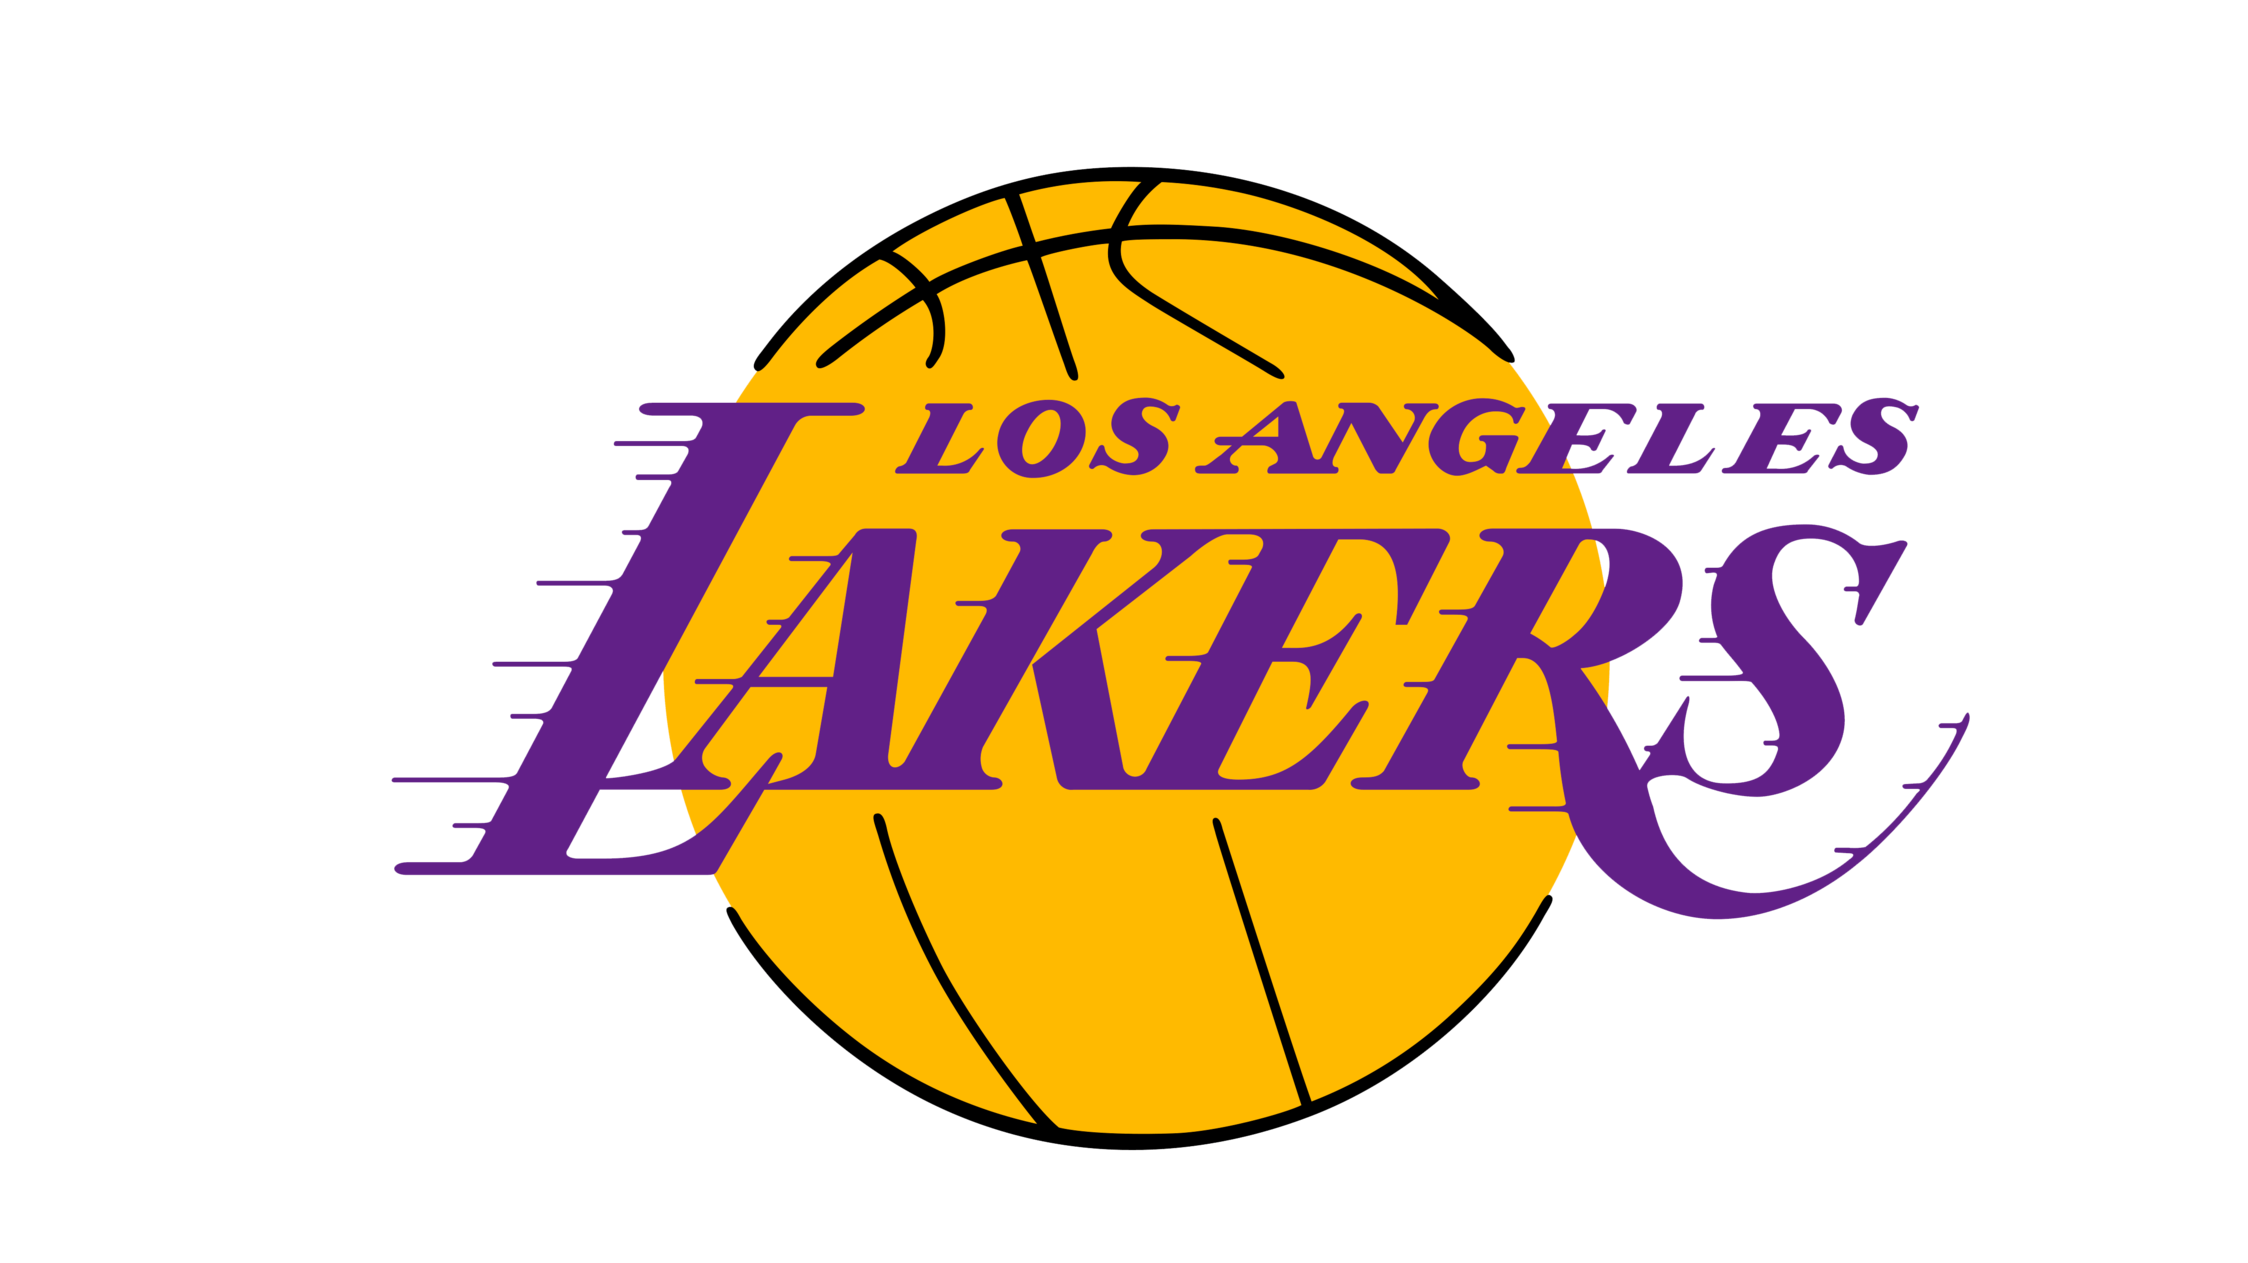 L.A. Lakers Logo PNG Transparent Background pngteam.com